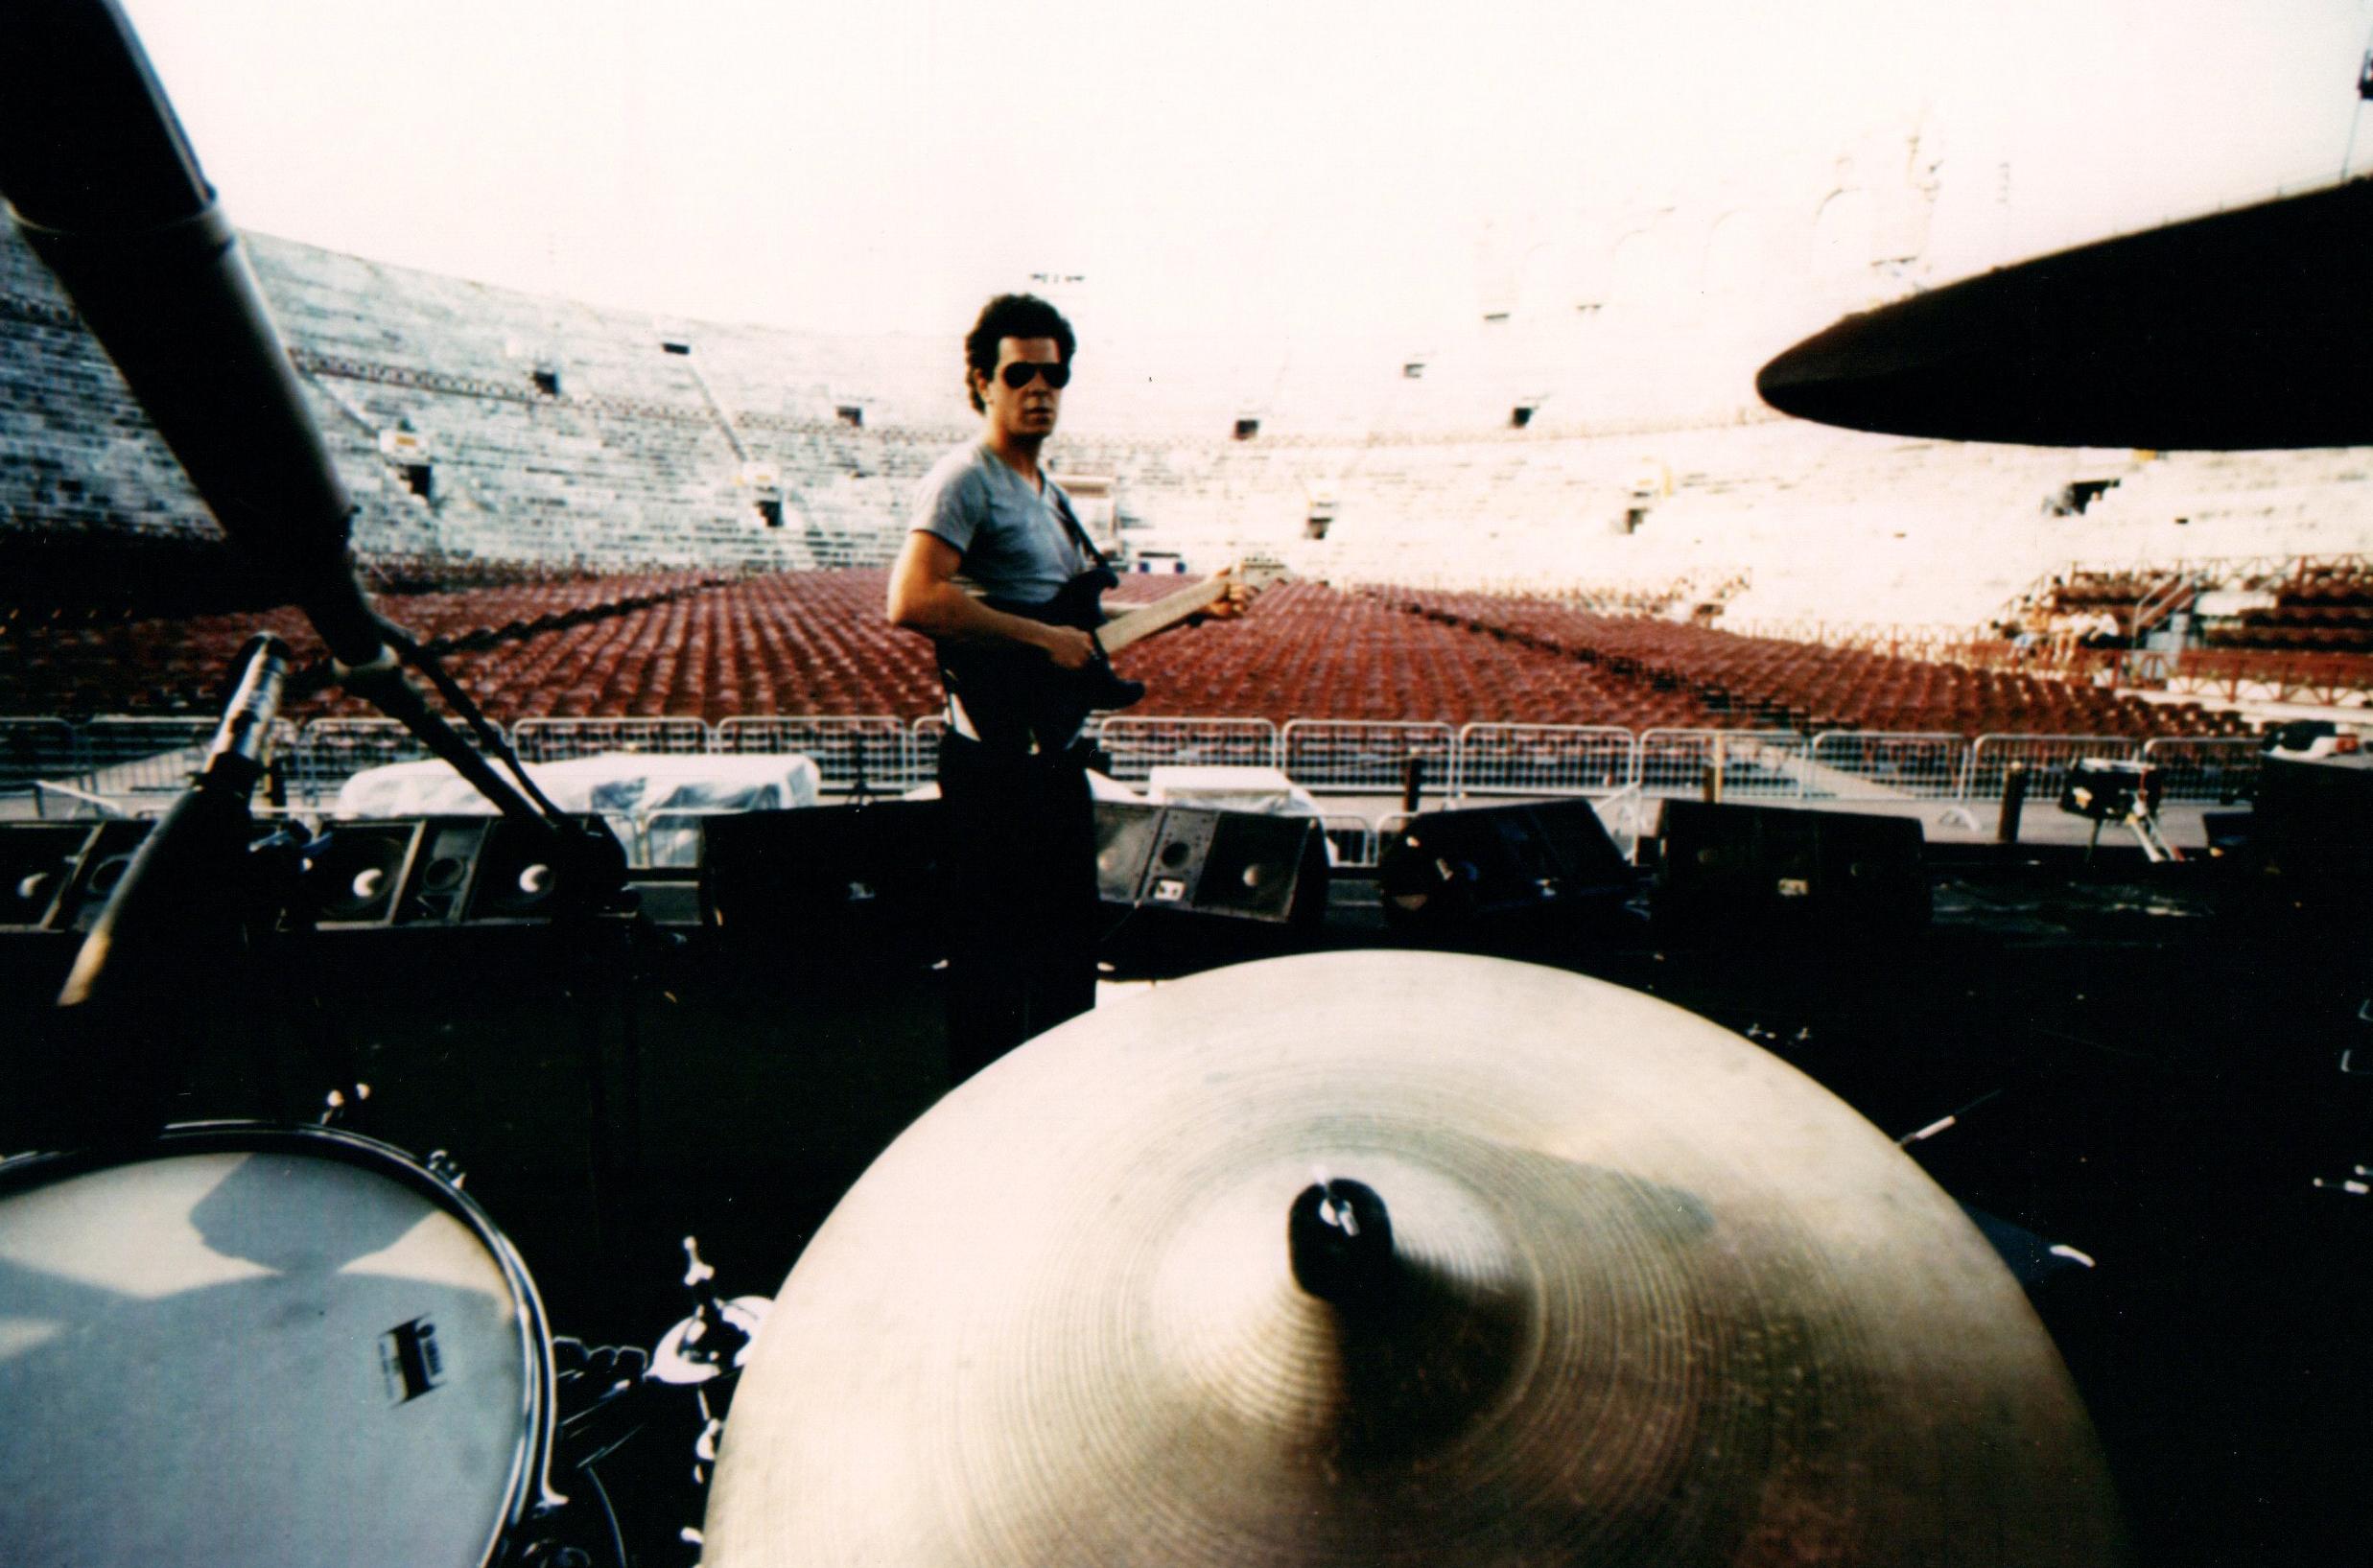 Luciano Viti Portrait Photograph - Lou Reed Sound Check in Empty Stadium Vintage Original Photograph